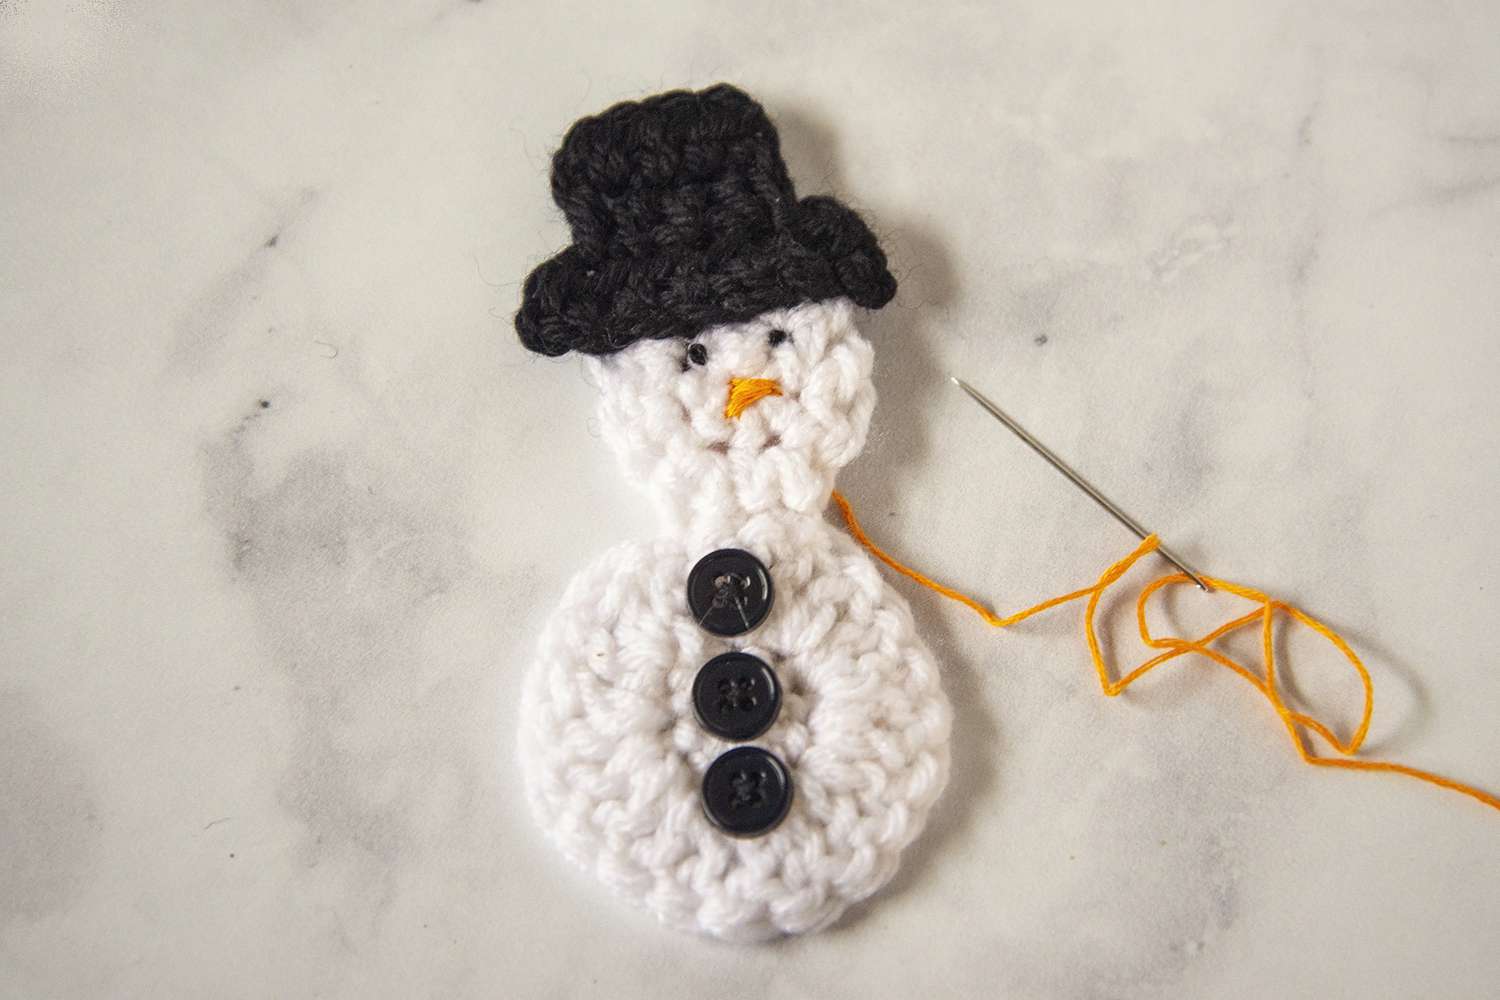 A crocheted snowman.